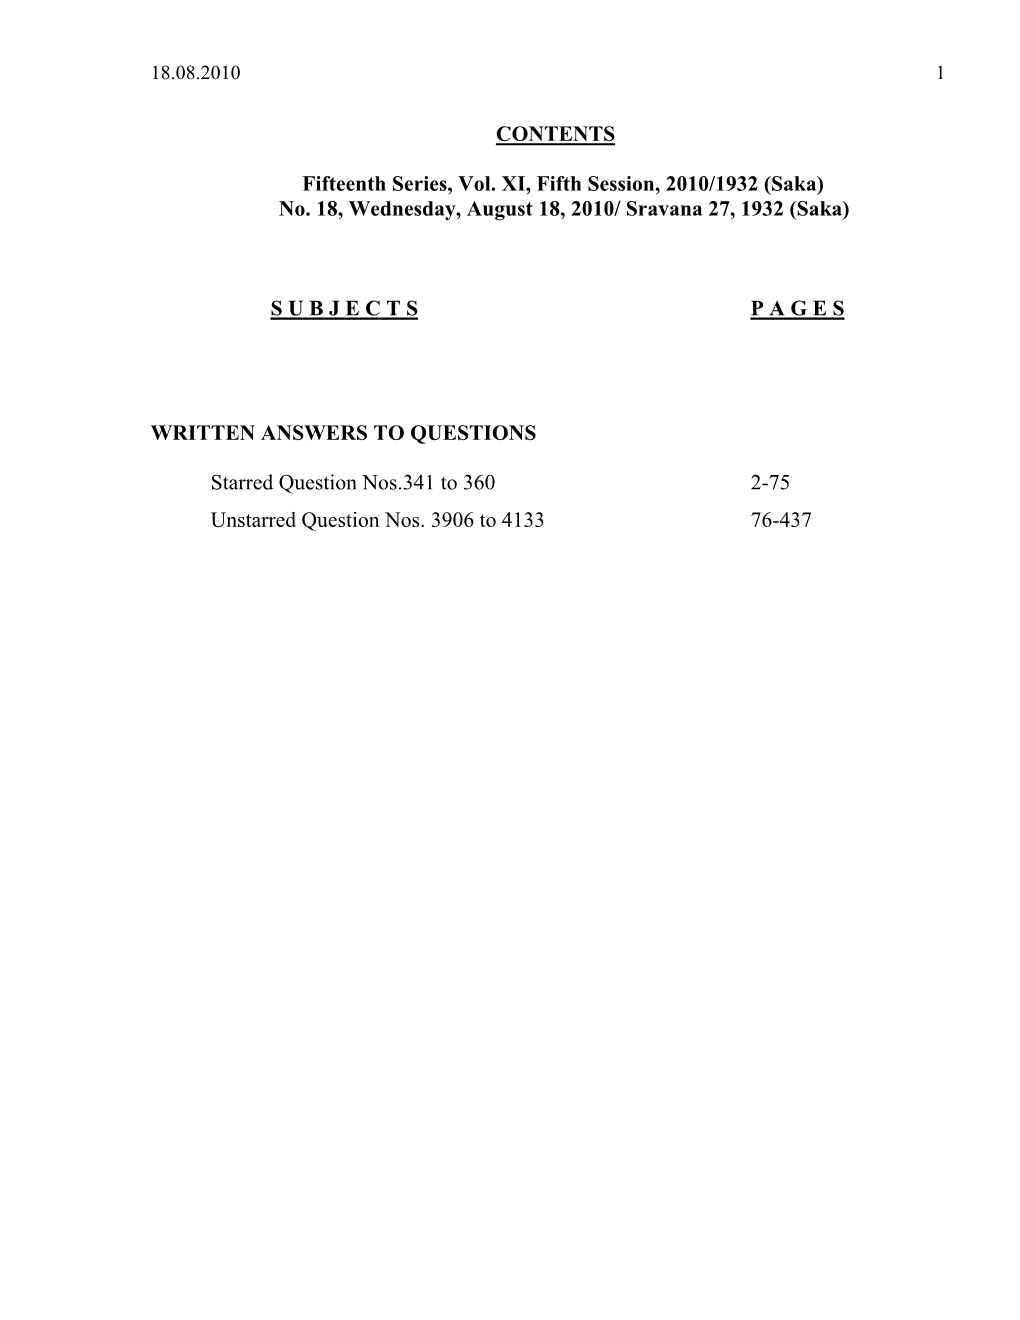 CONTENTS Fifteenth Series, Vol. XI, Fifth Session, 2010/1932 (Saka) No